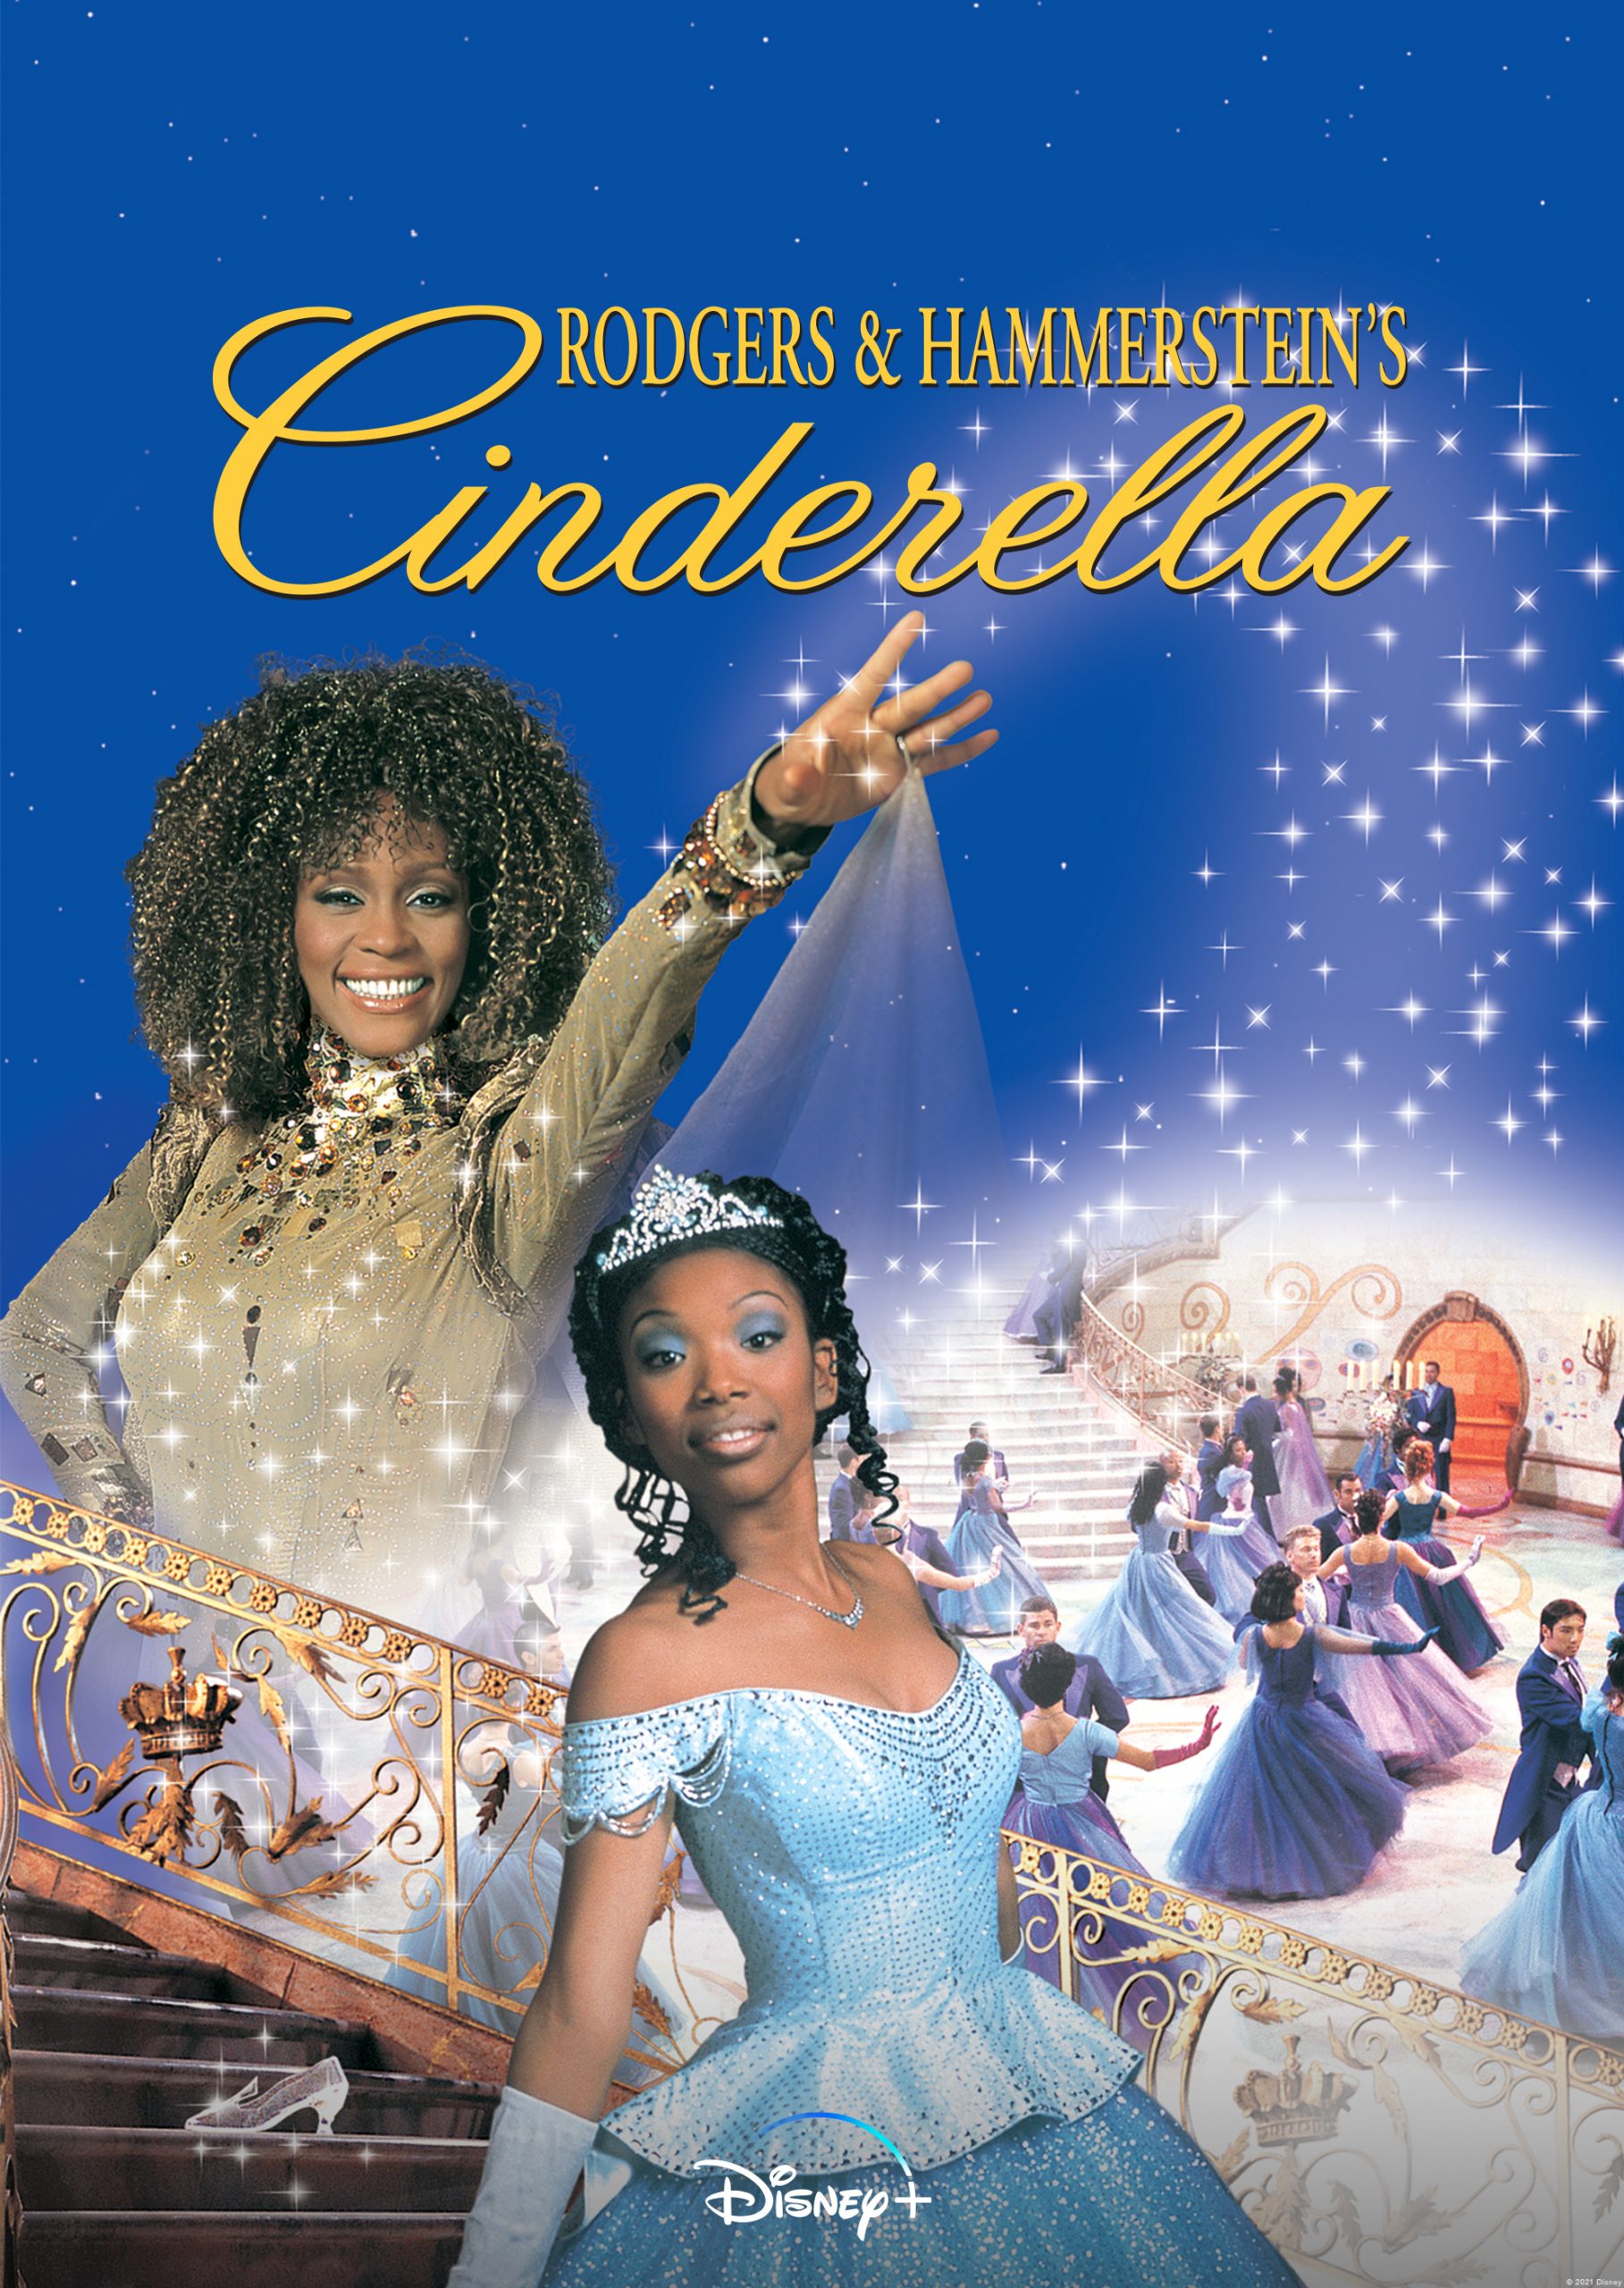 ‘Rodgers & Hammerstein’s Cinderella’ Streams Feb 12th On Disney +